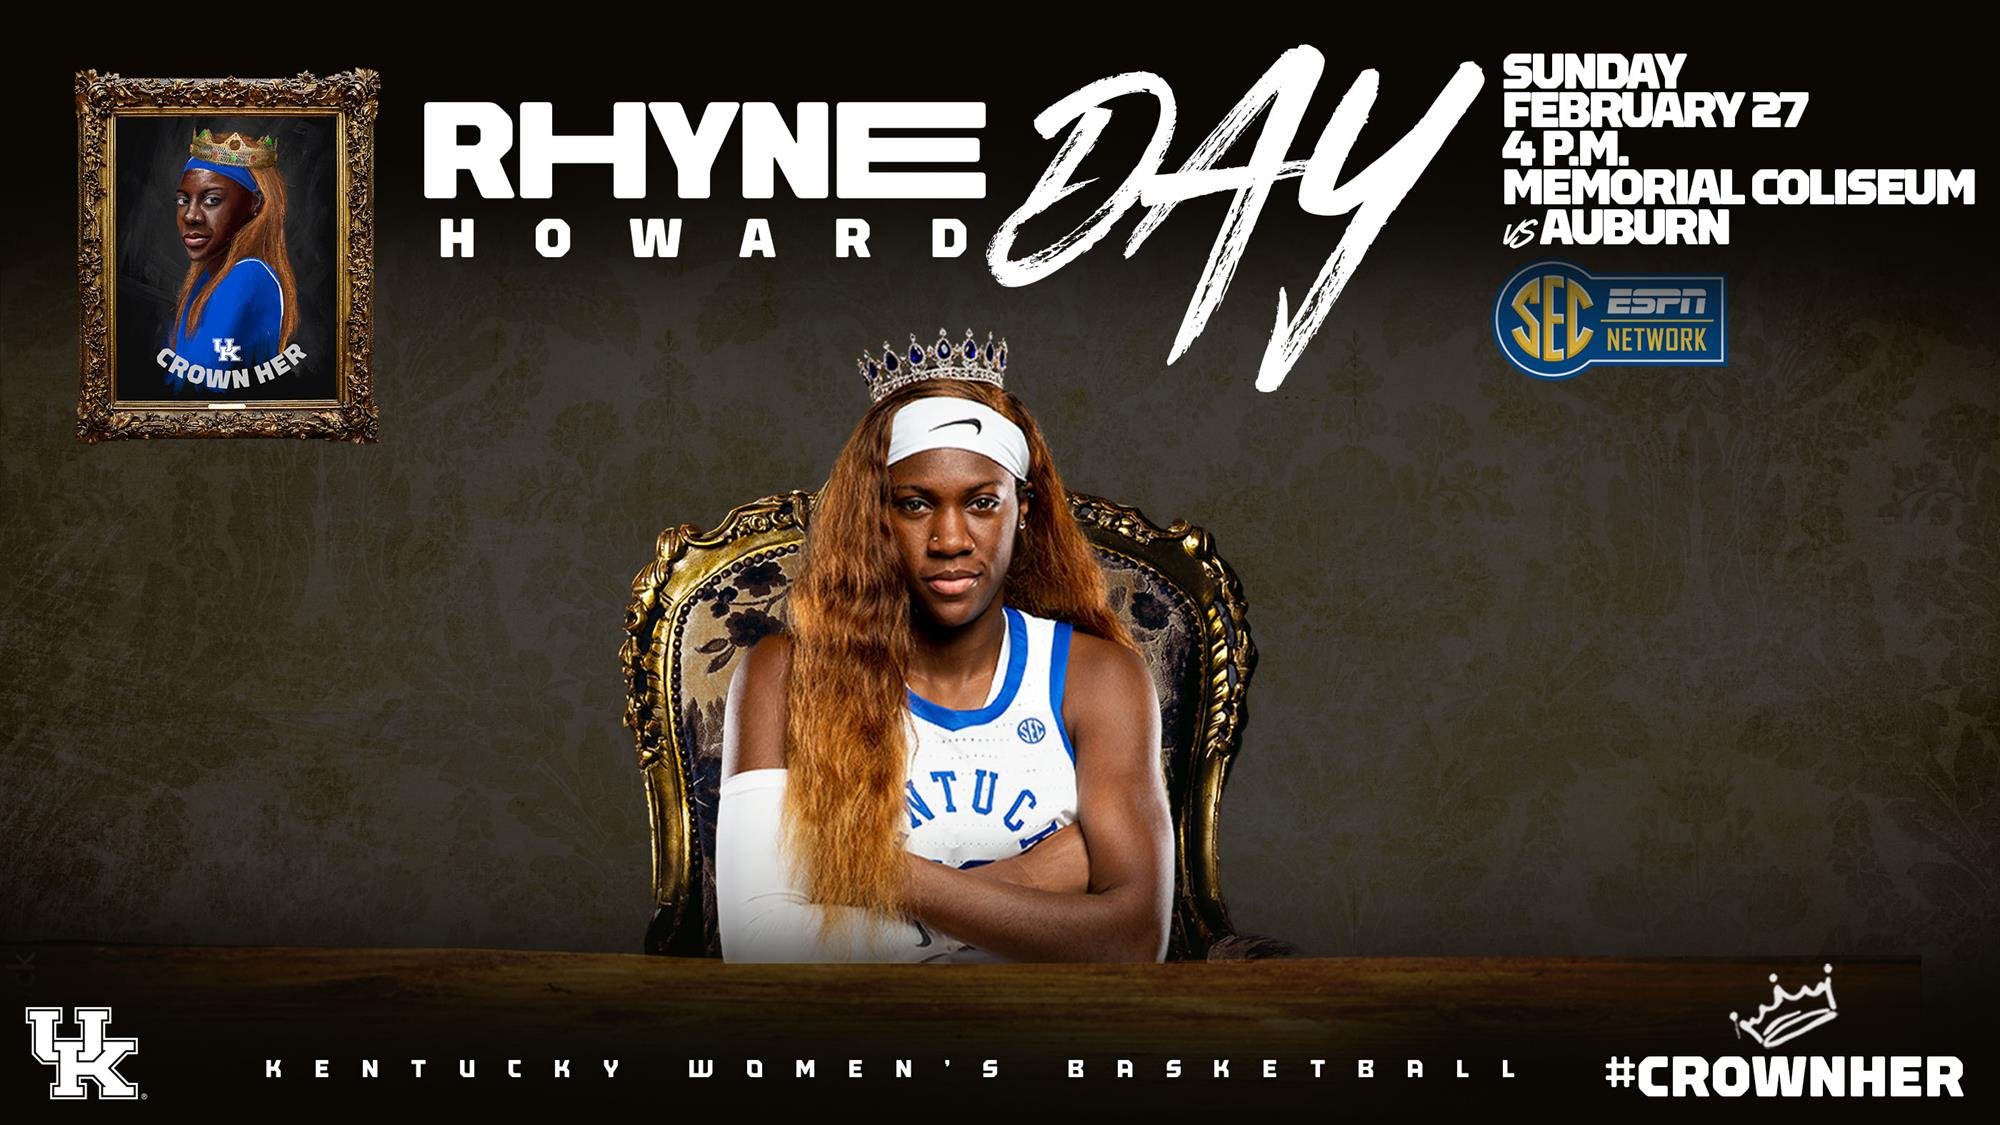 Kentucky Celebrates Rhyne Howard Day Sunday in Memorial Coliseum